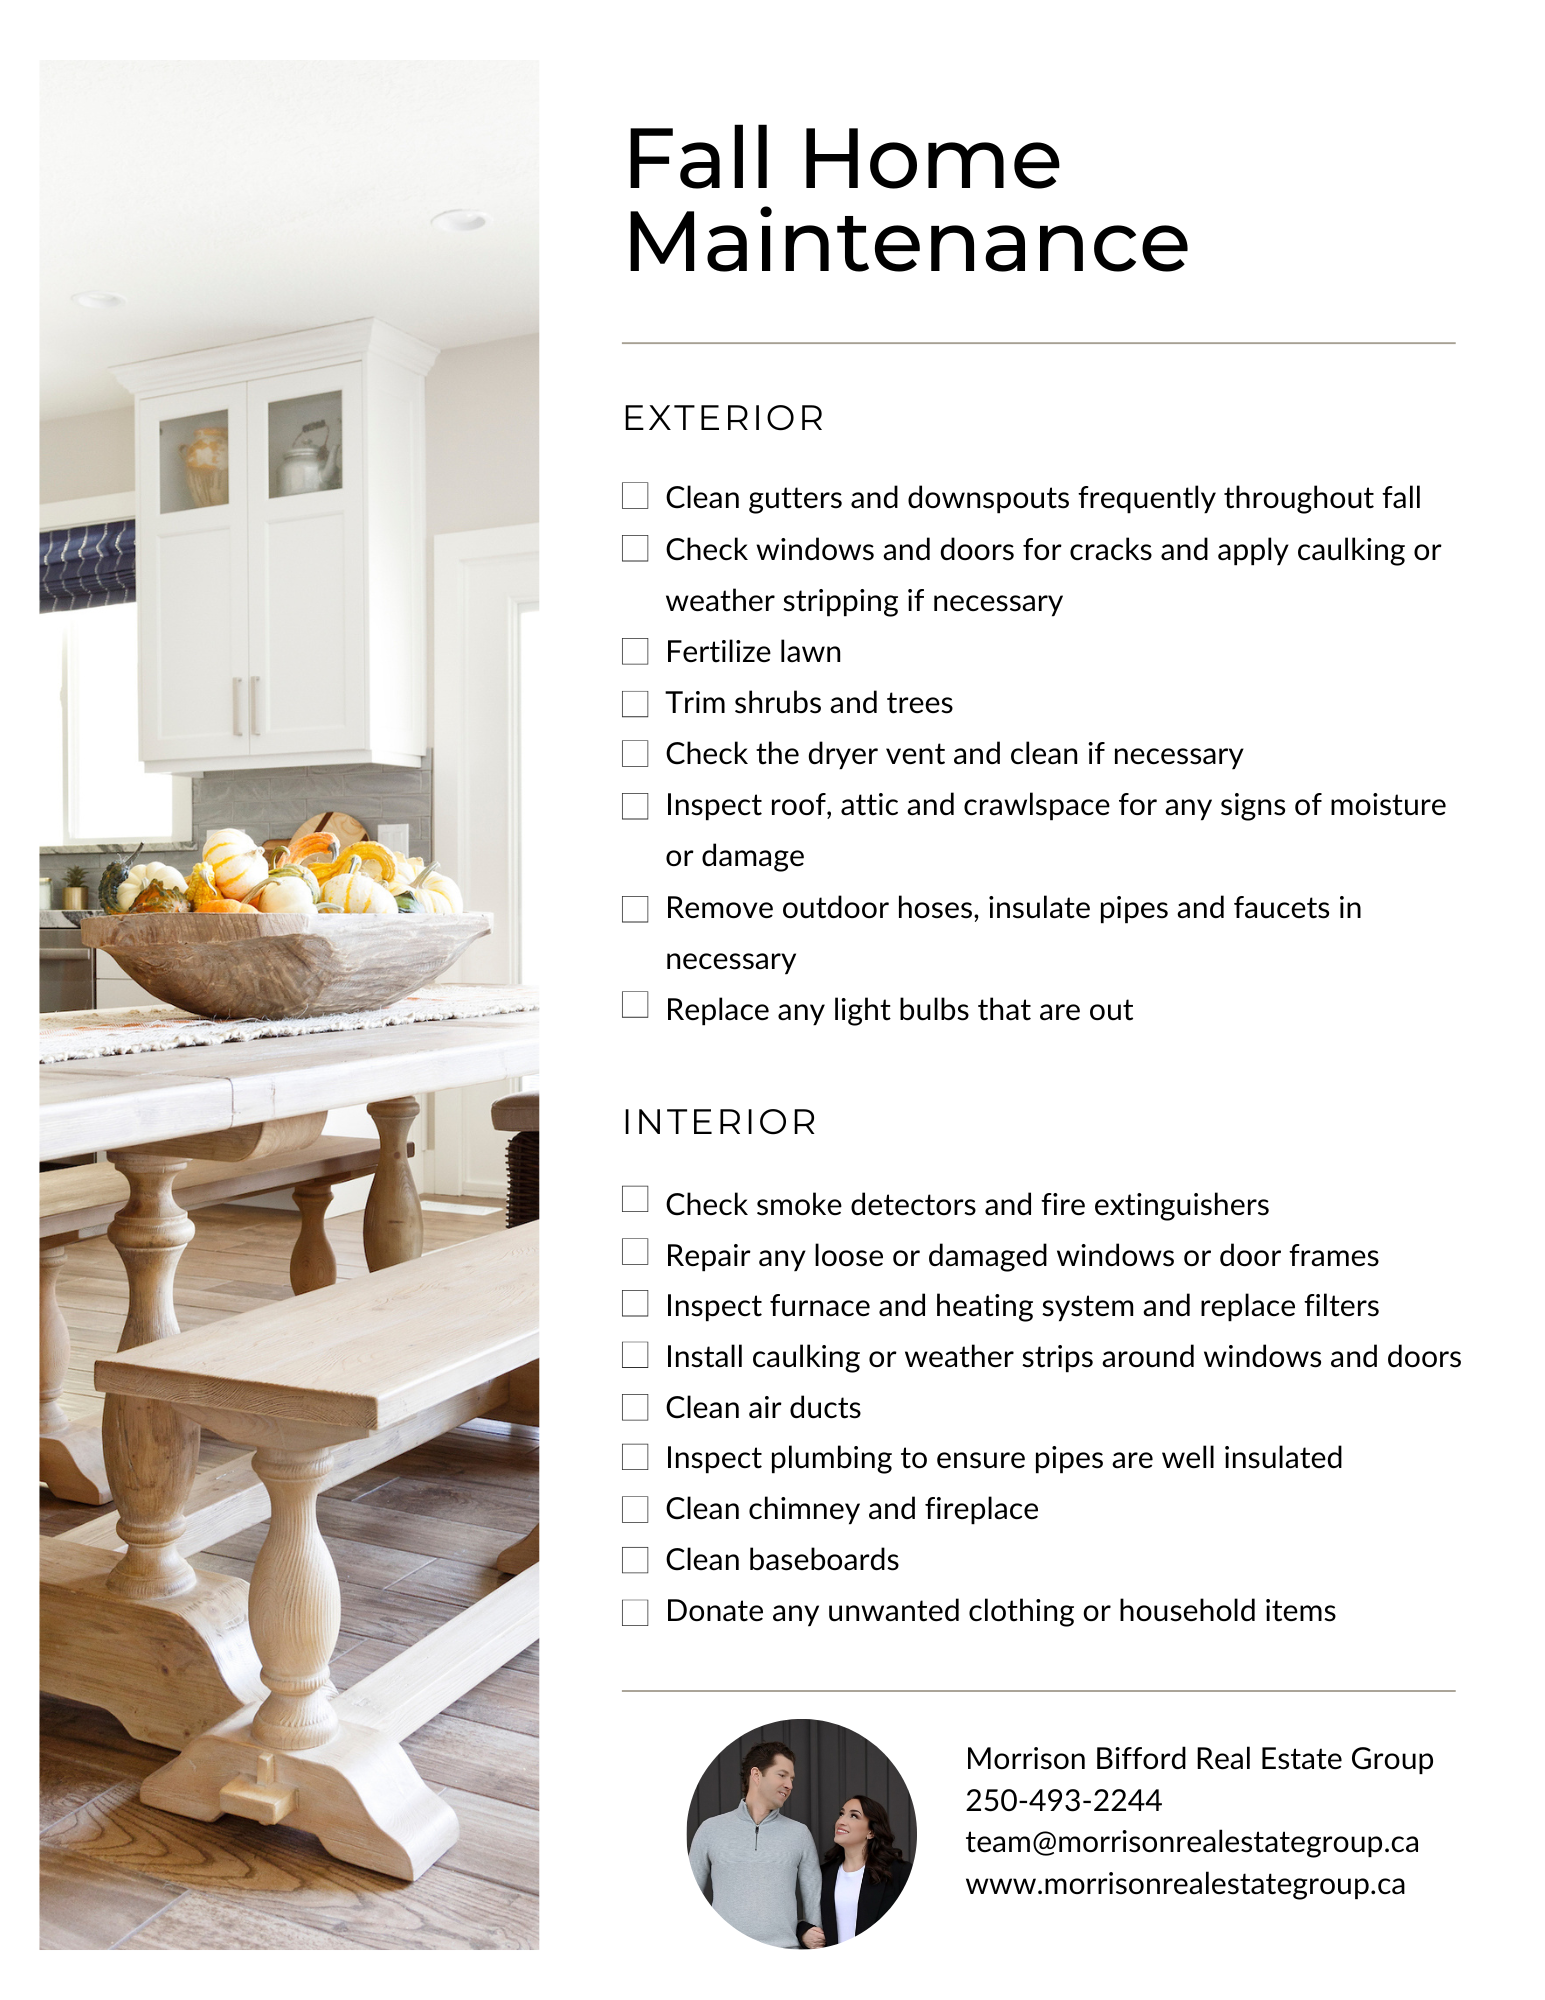 Fall Home Maintenance Checklist ⋆ Morrison Bifford Real Estate Group